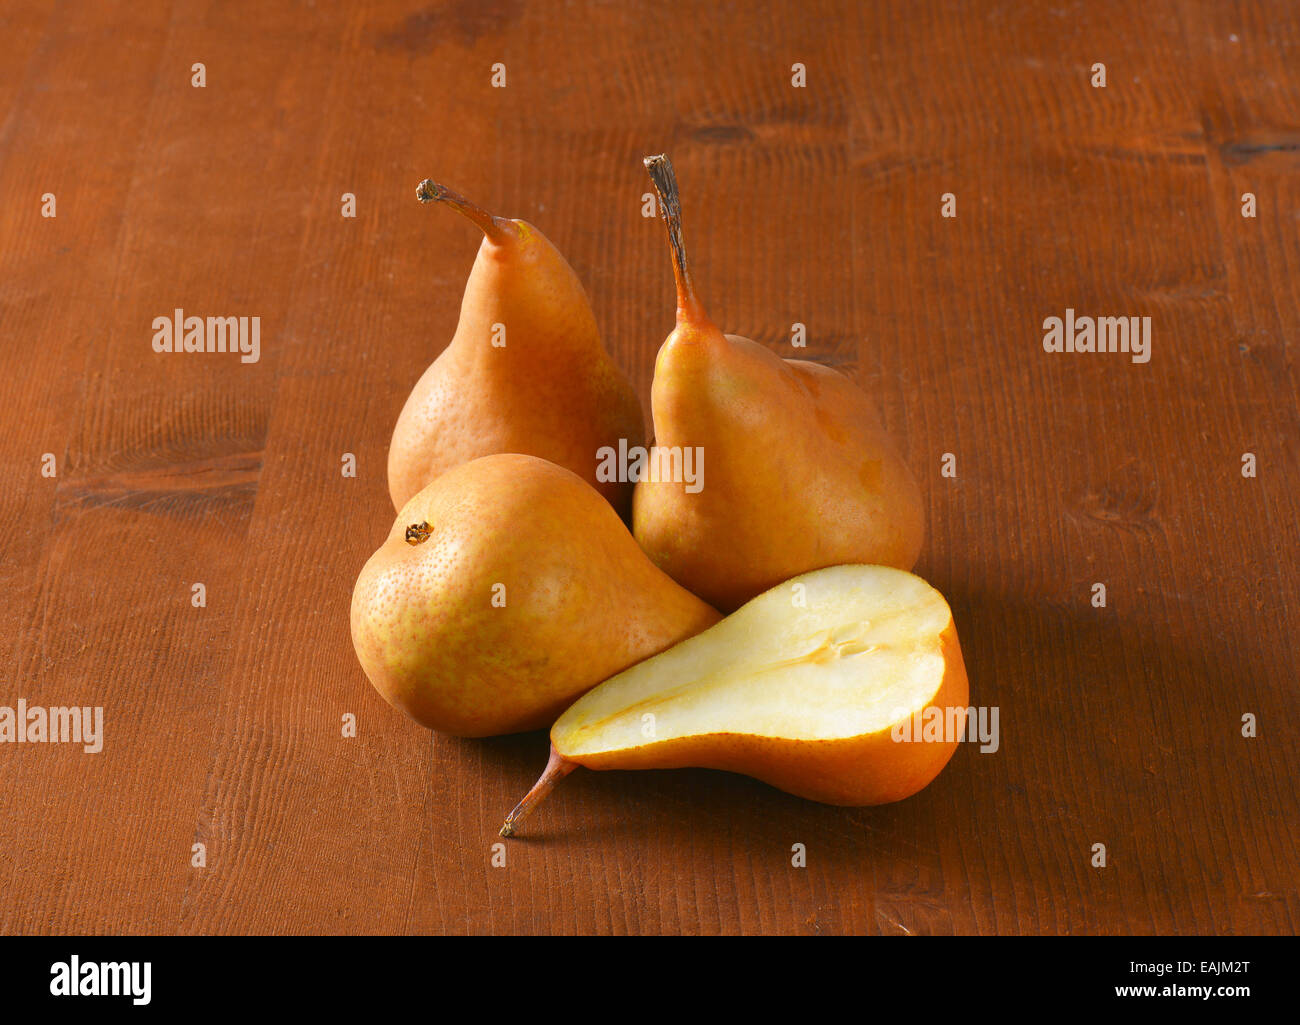 European pears, whole and a half Stock Photo